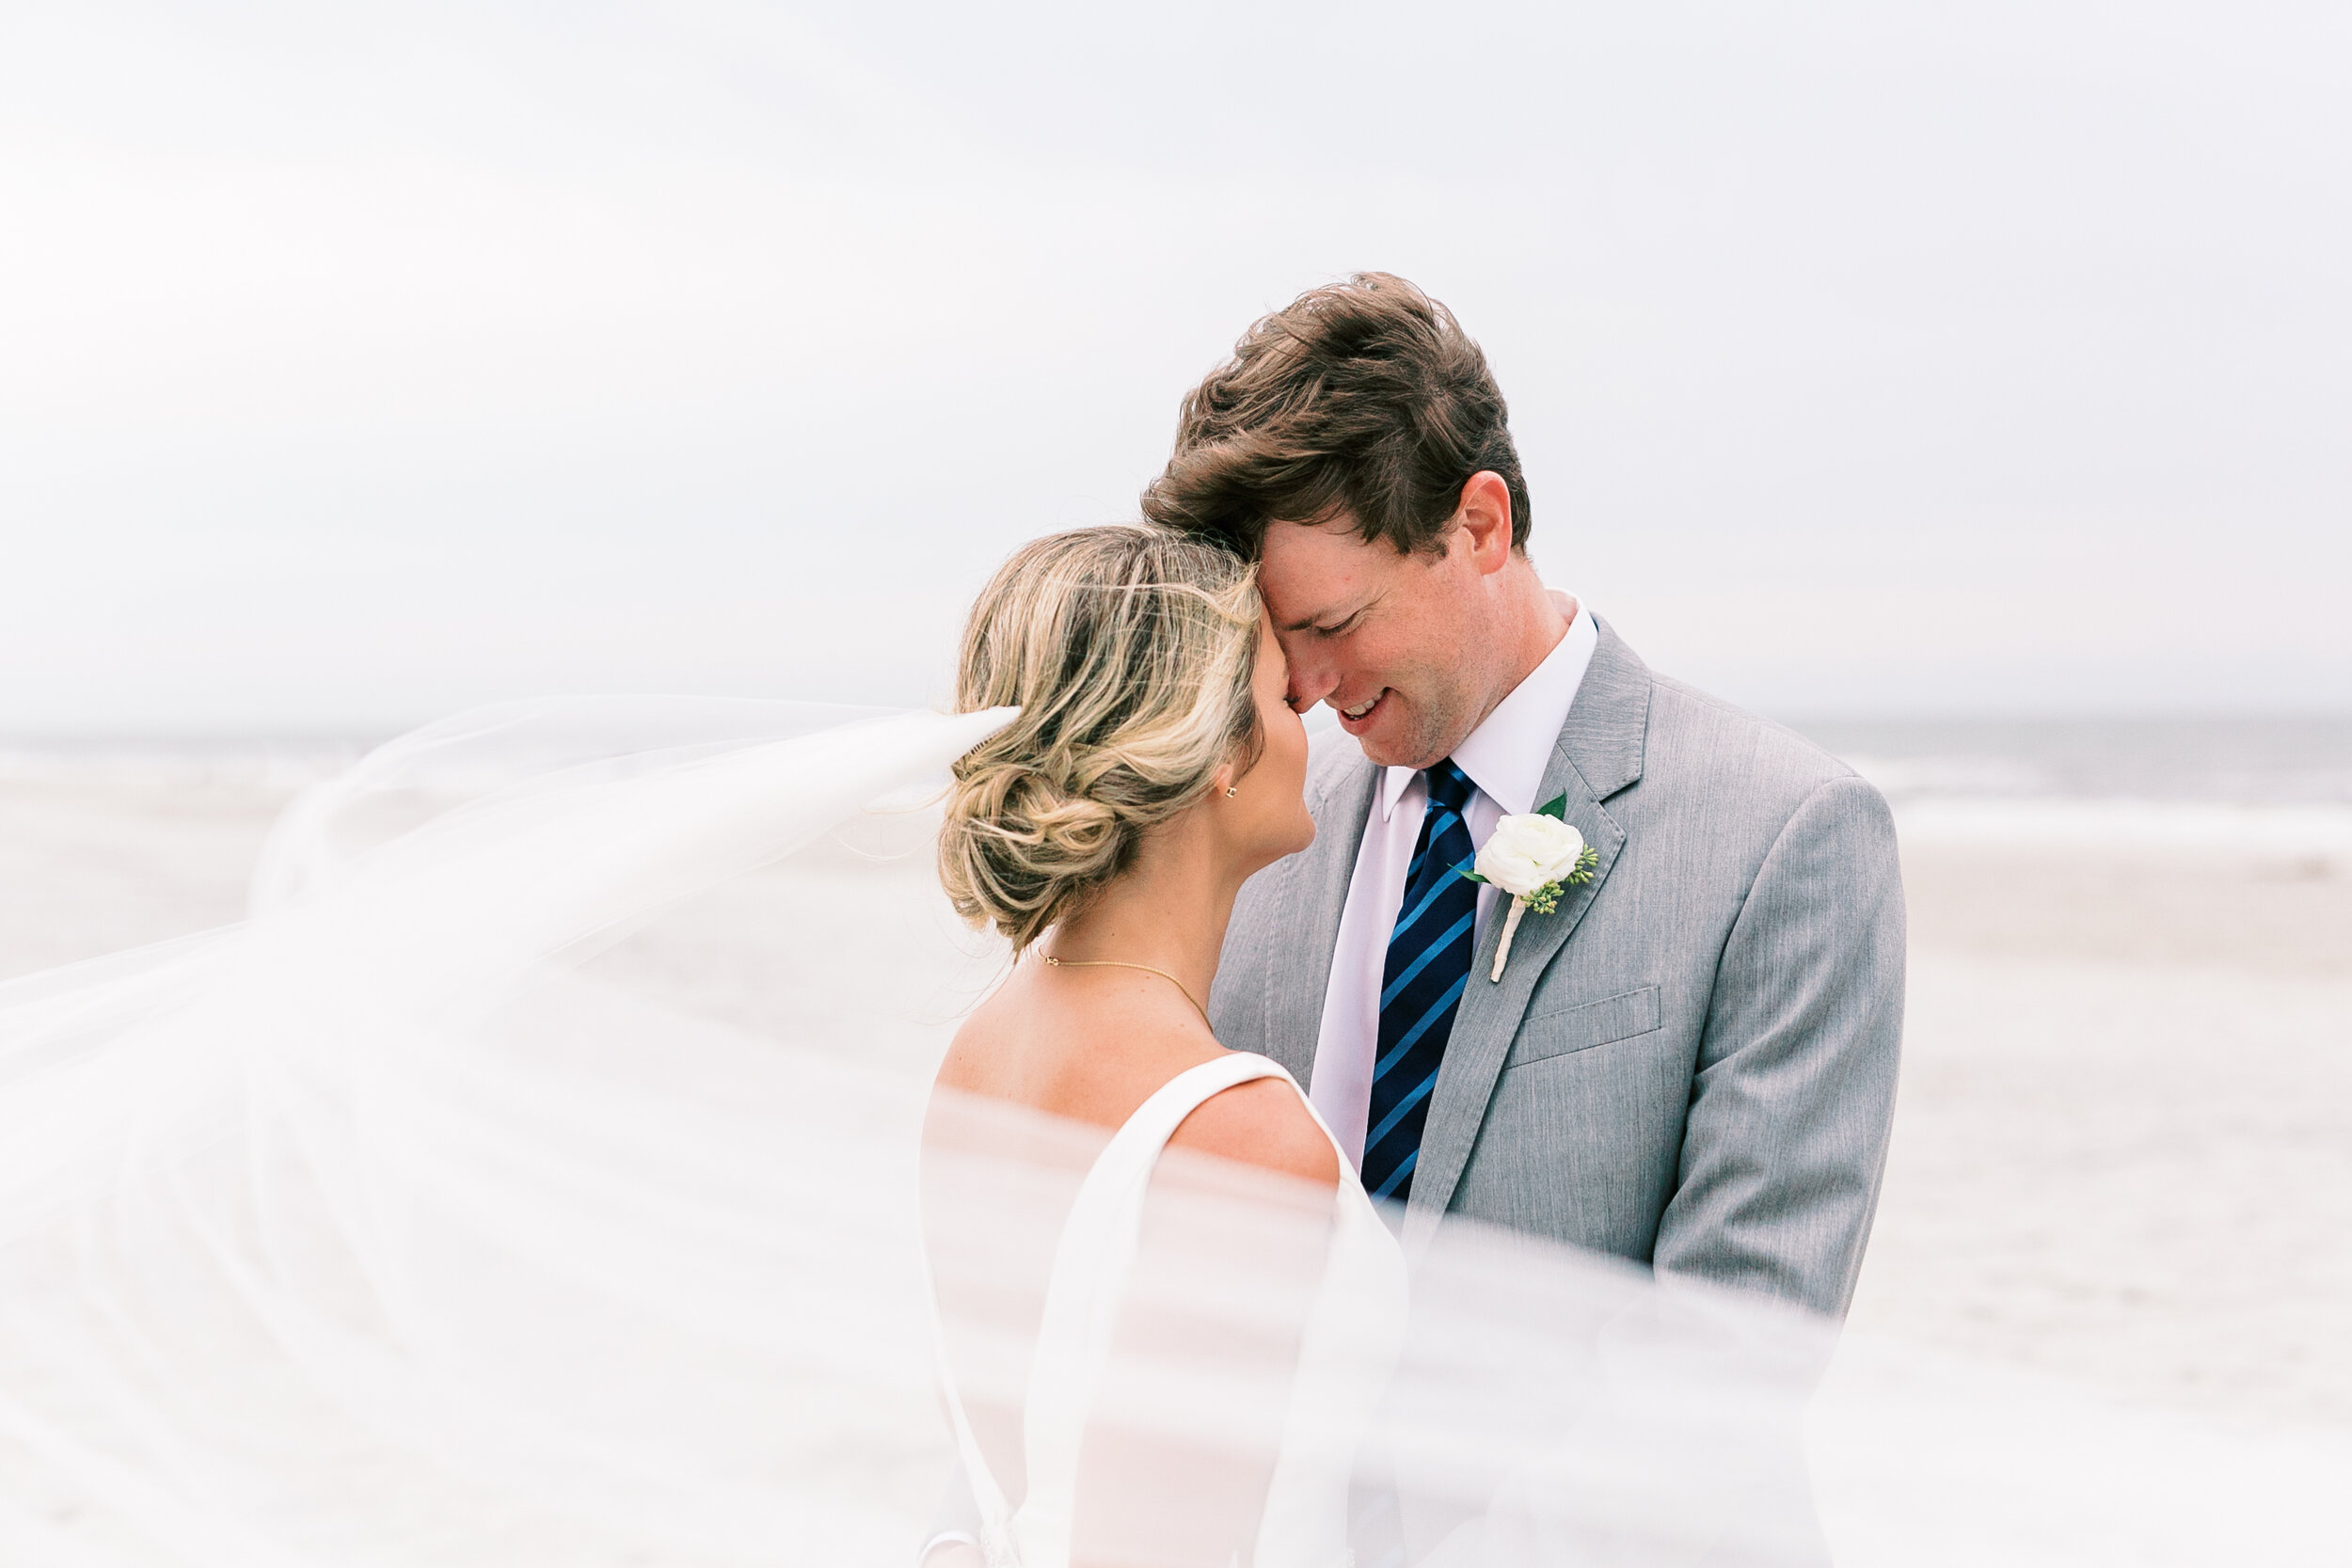 Breathtaking beach portrait of bride and groom at Hilton Head Island, South Carolina wedding.